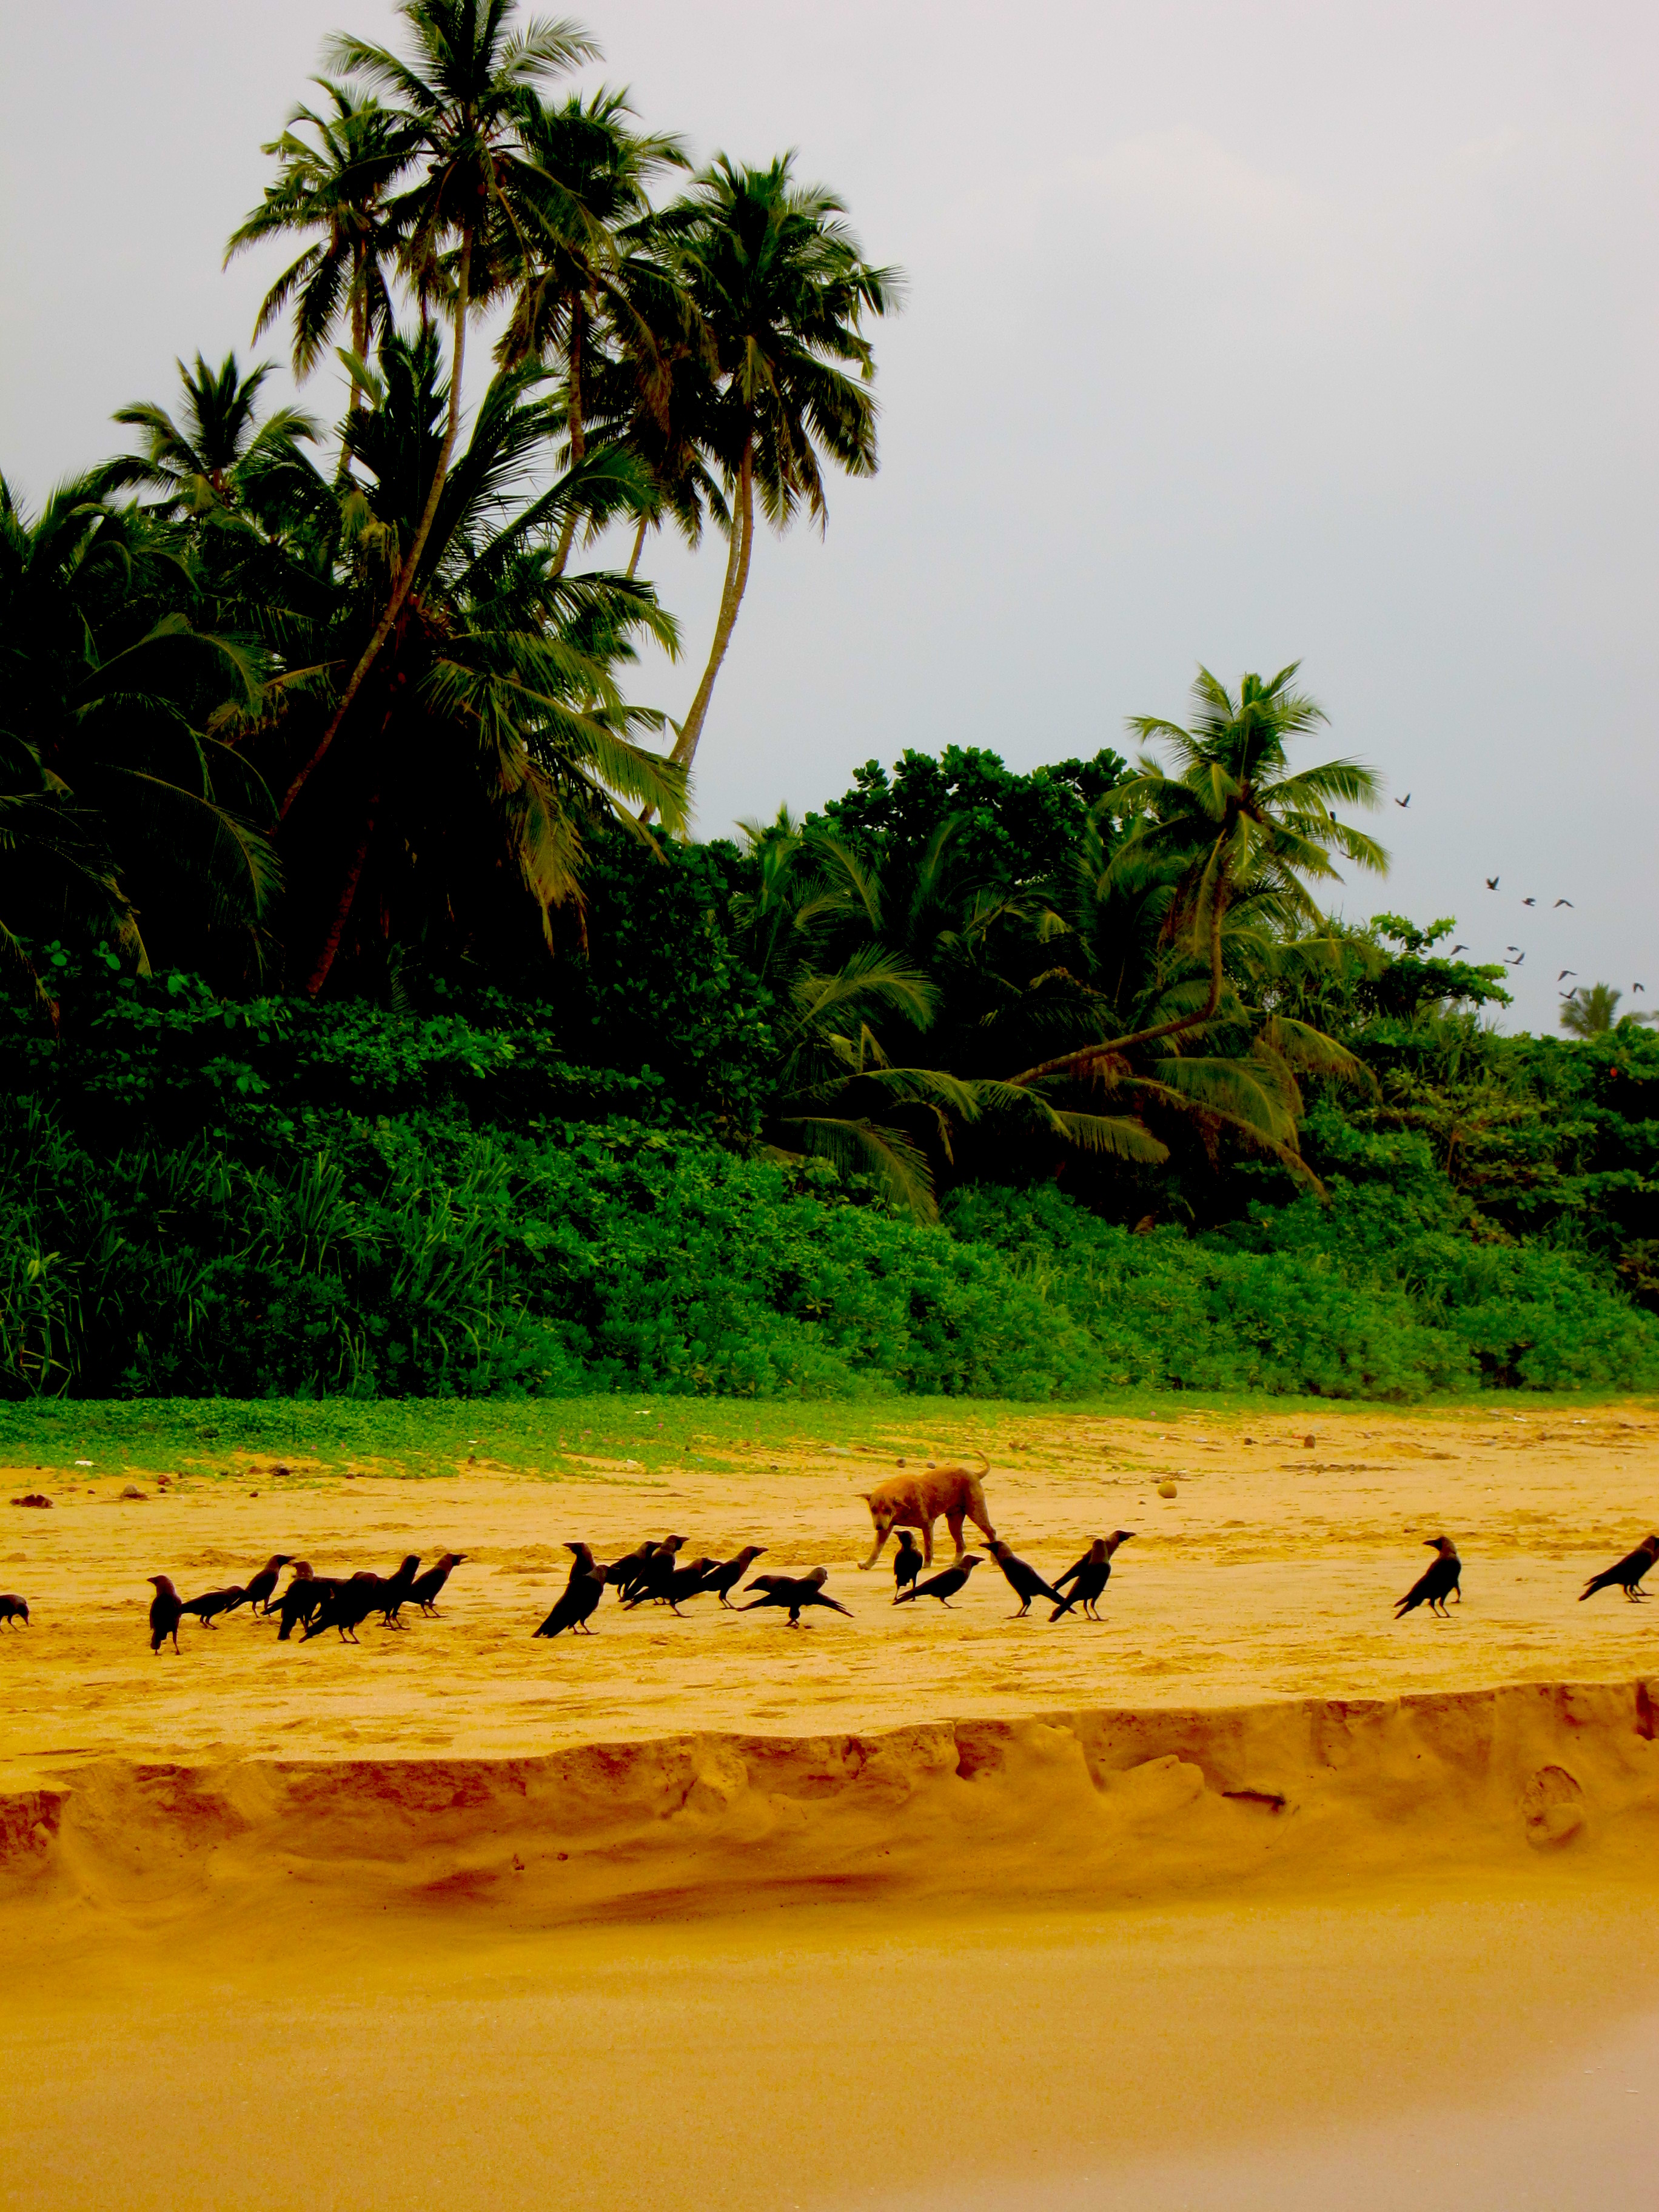 Sri Lanka 2012 - Dog, palm trees, birds, sand